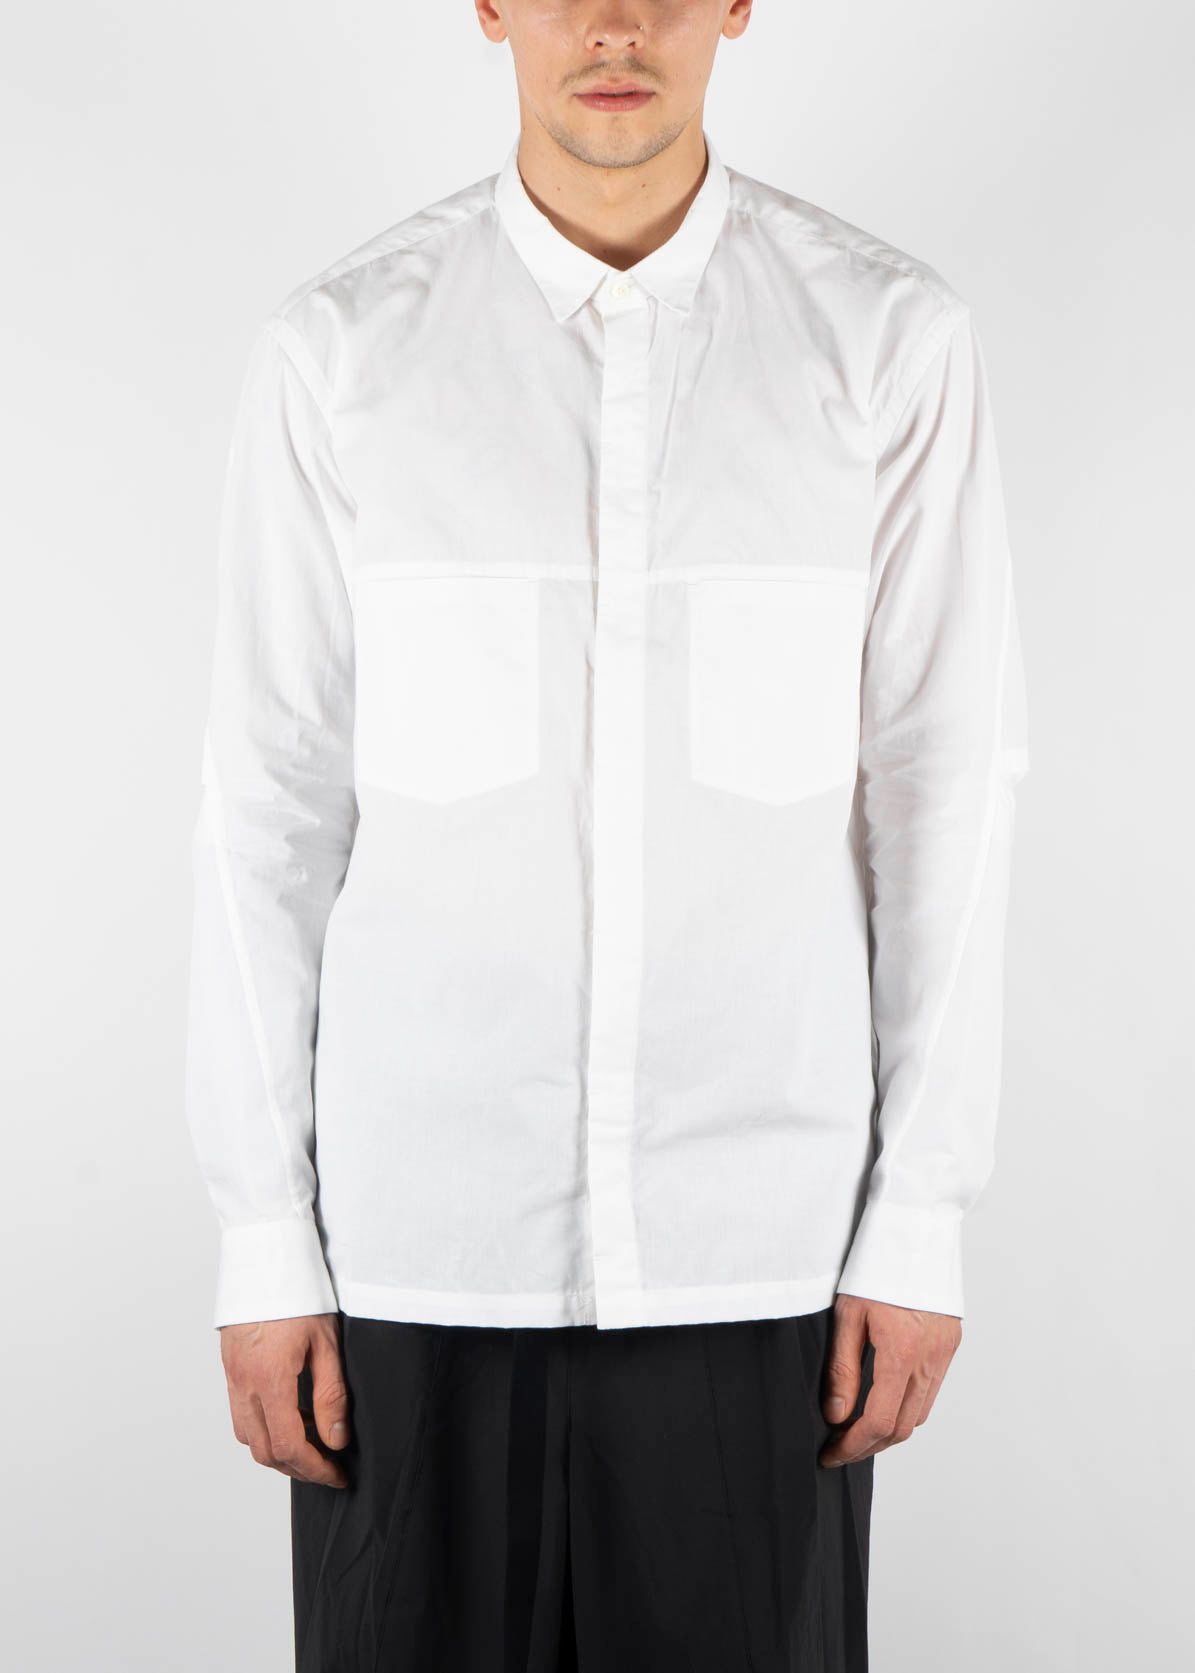 Cotton Linen Shirt White